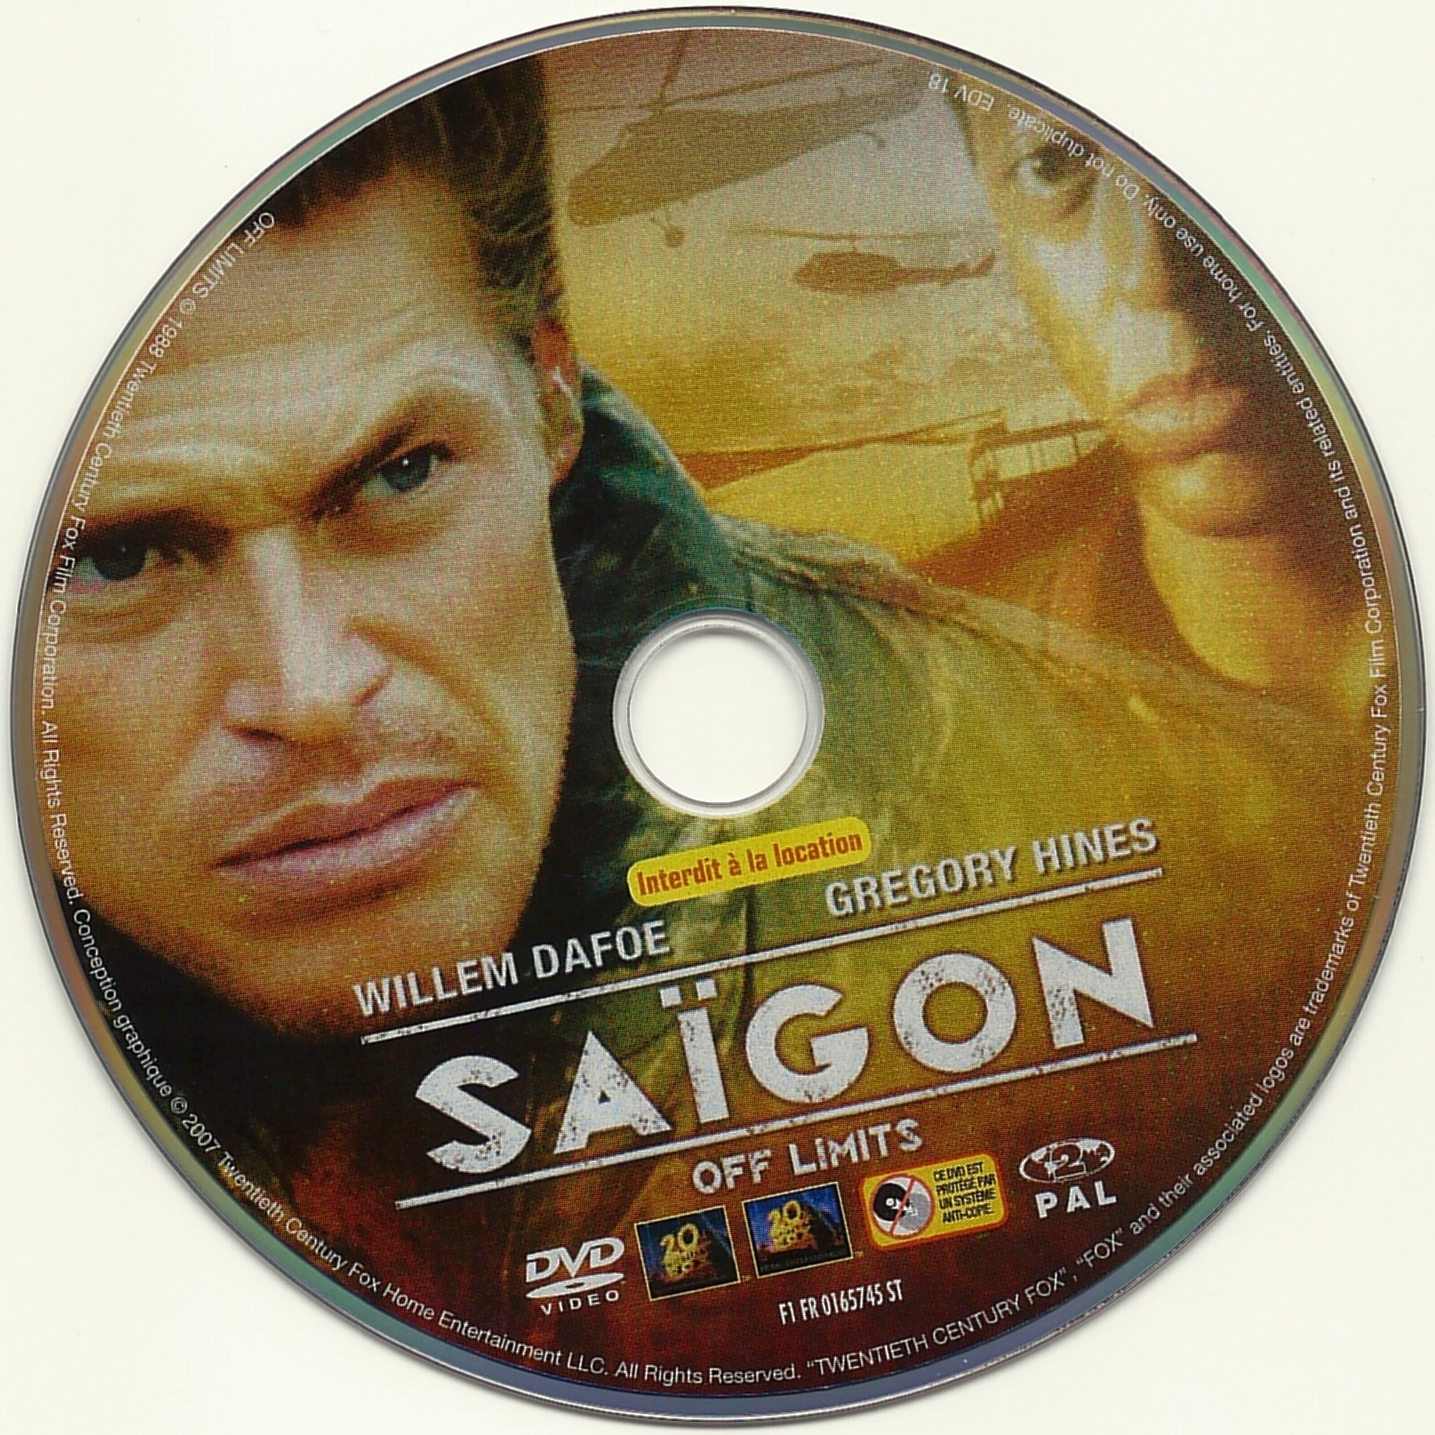 Saigon off limits